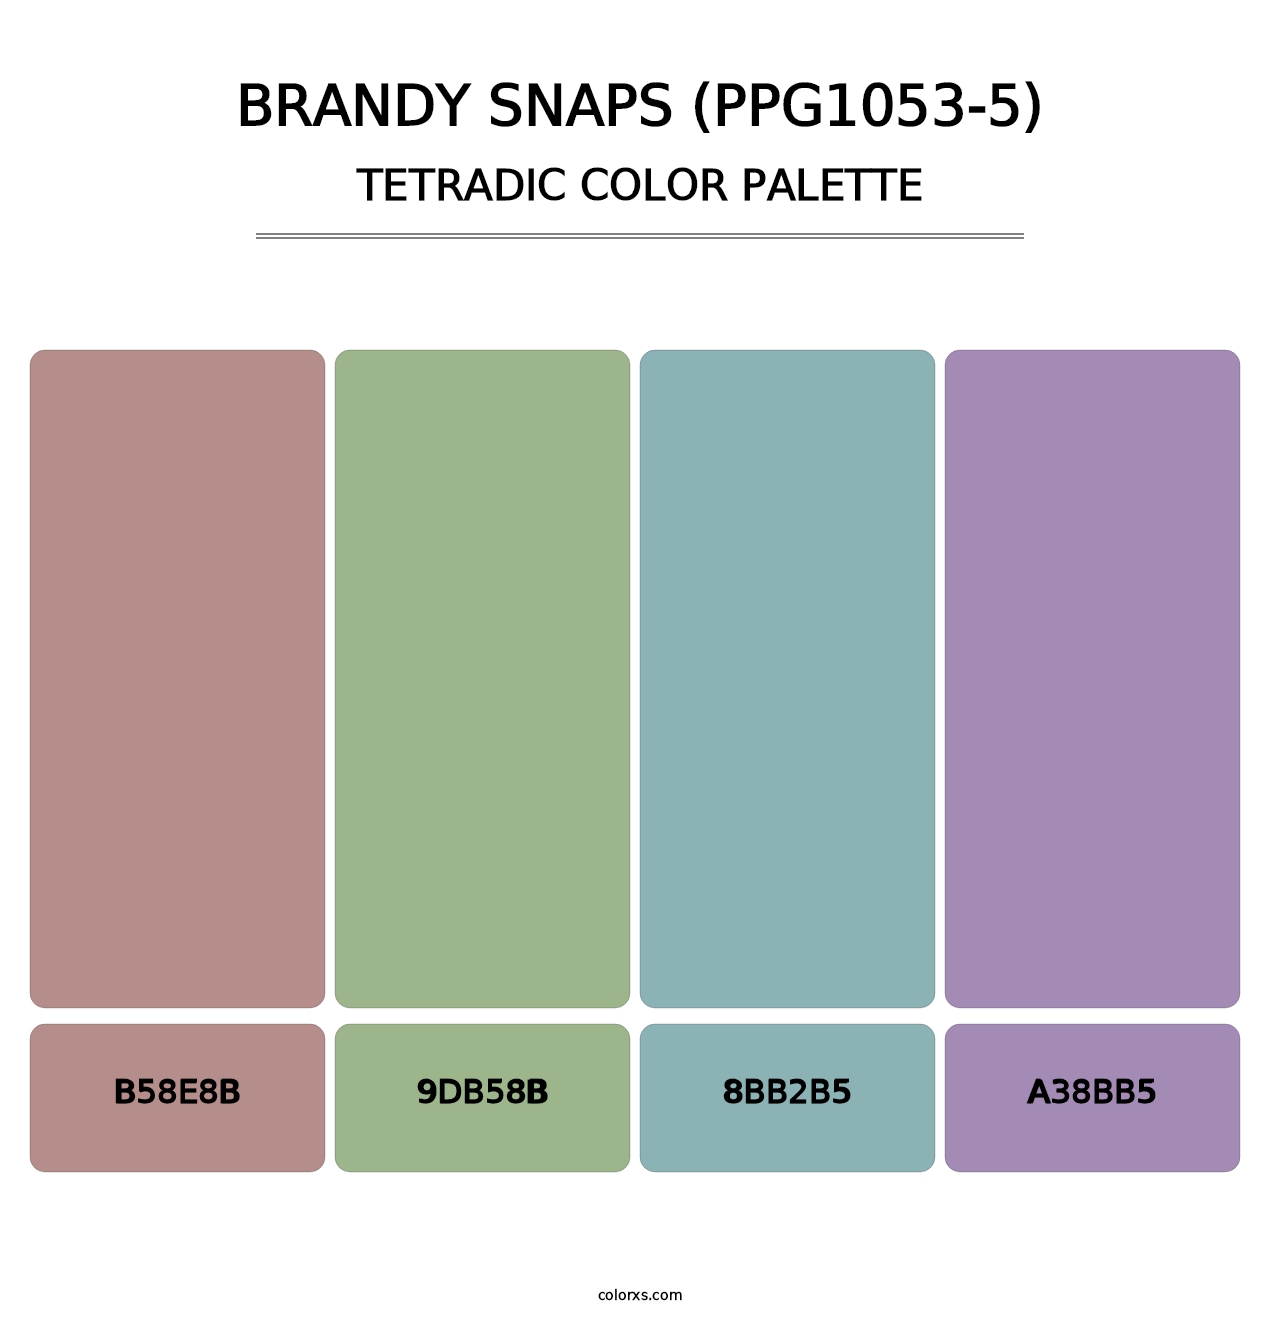 Brandy Snaps (PPG1053-5) - Tetradic Color Palette